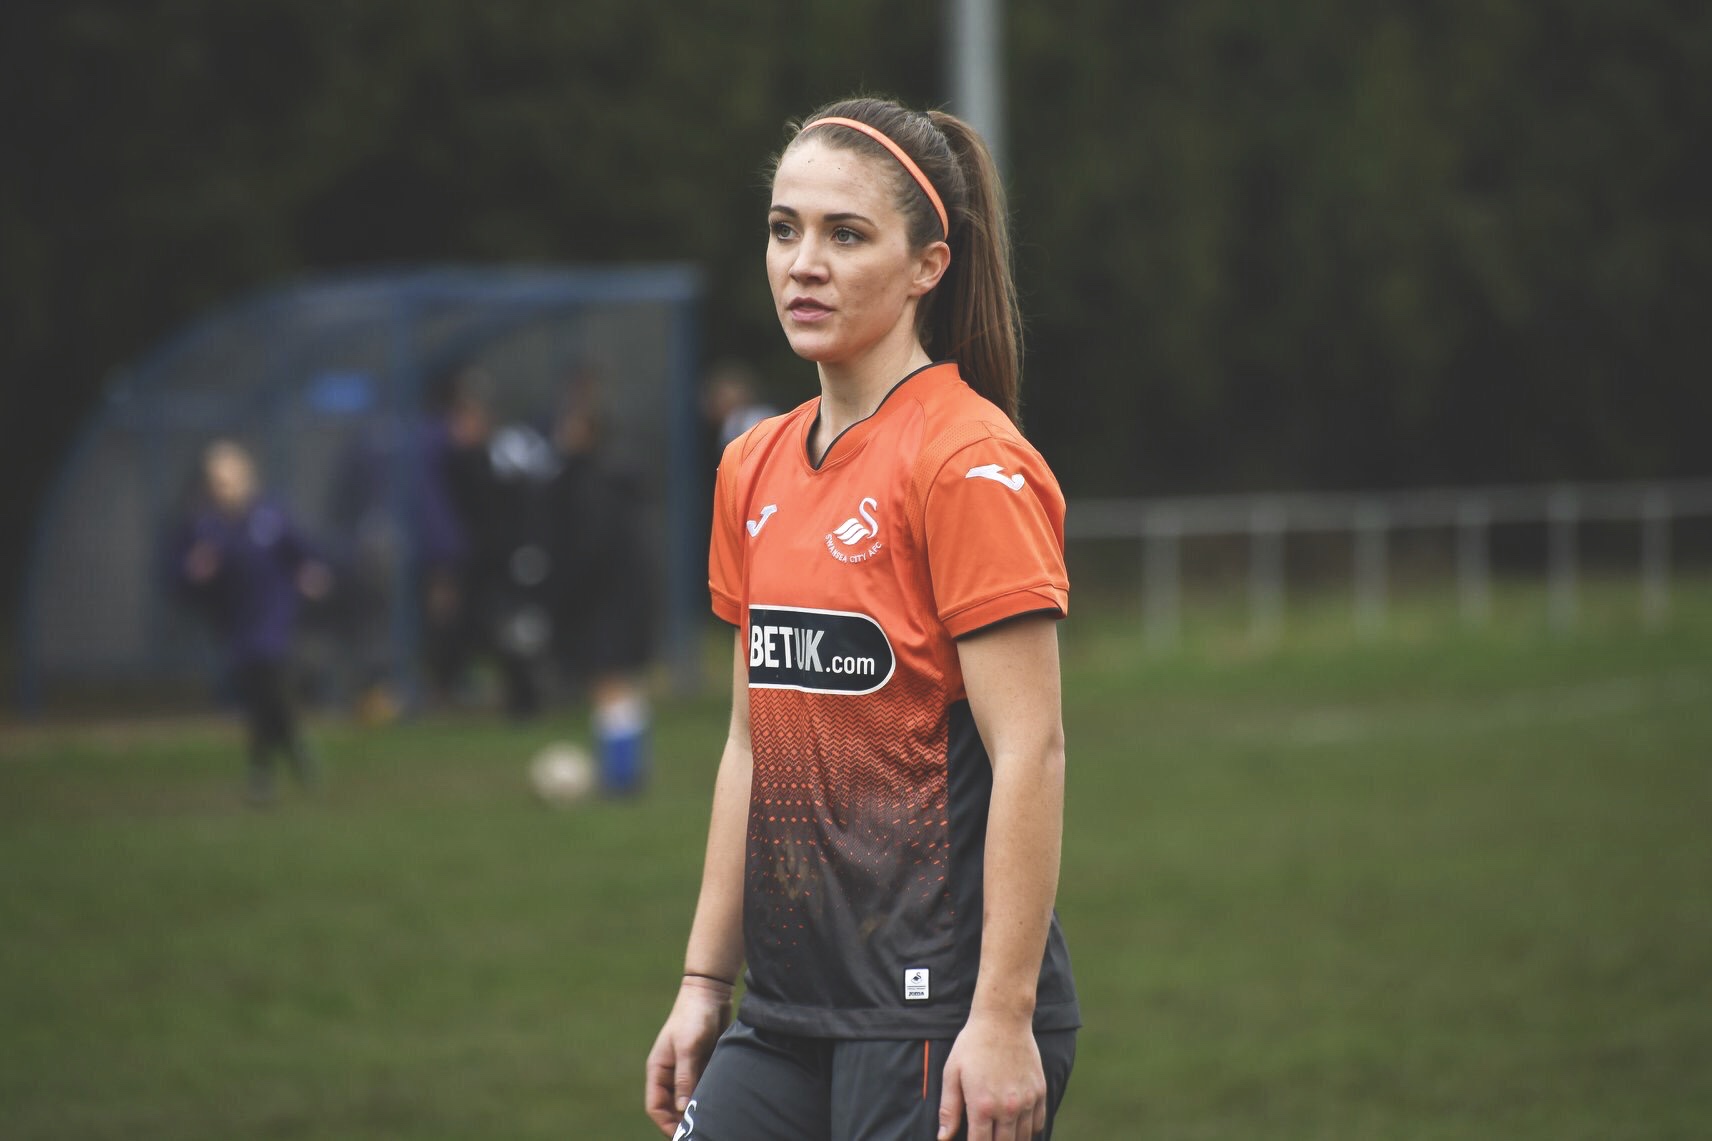 Emma Beynon in action for Swansea City Ladies.